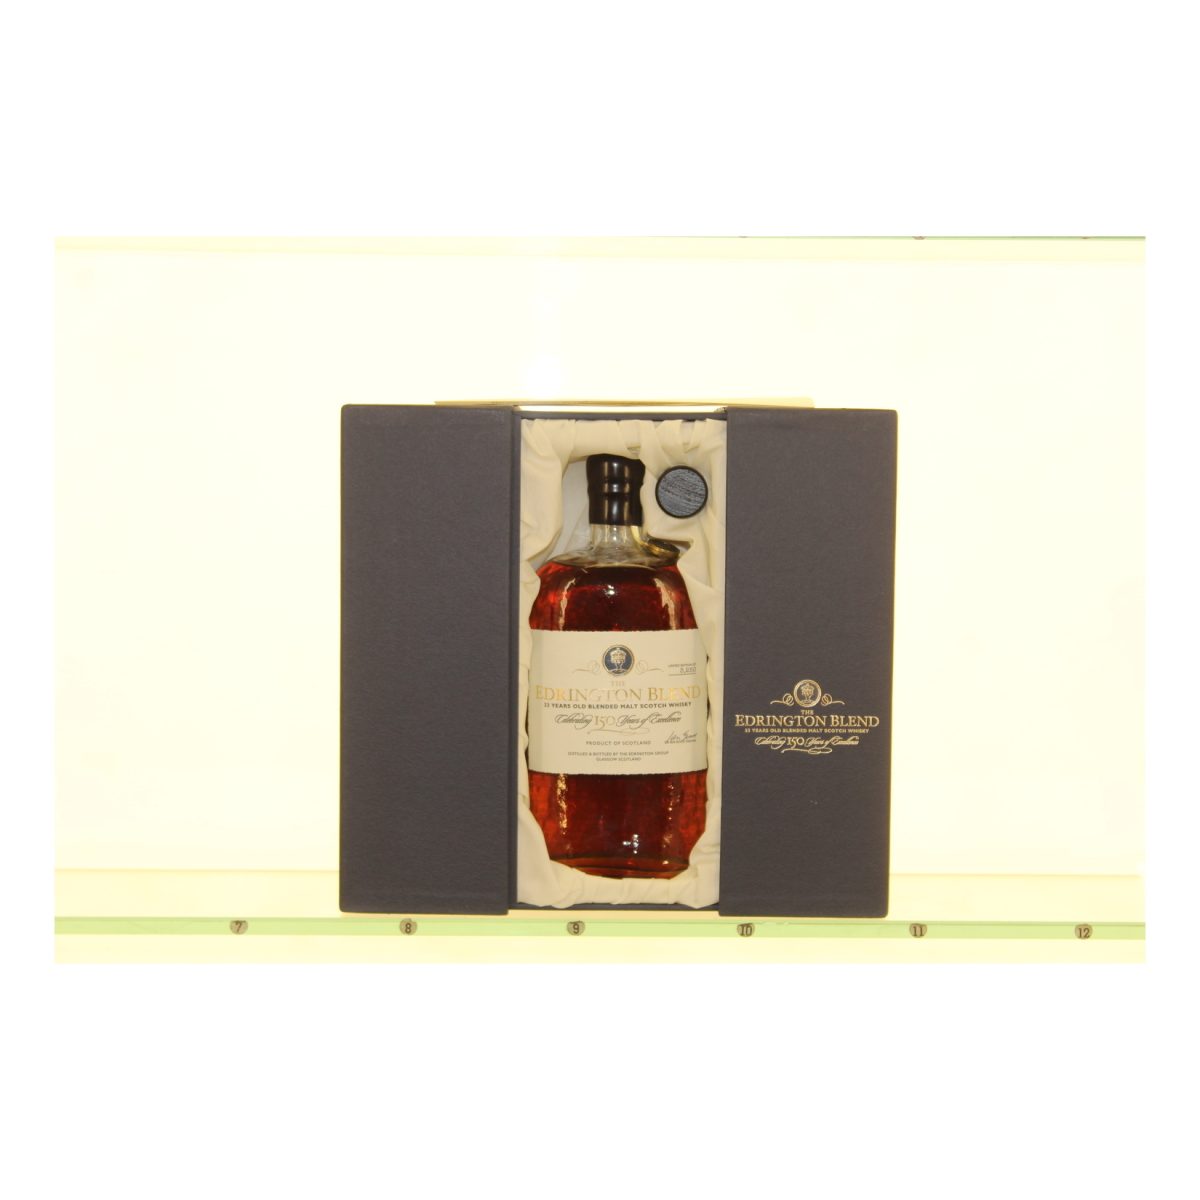 The Edrington Blend '150th Anniversary' 33 Year Old Blended Malt Scotch Whisky